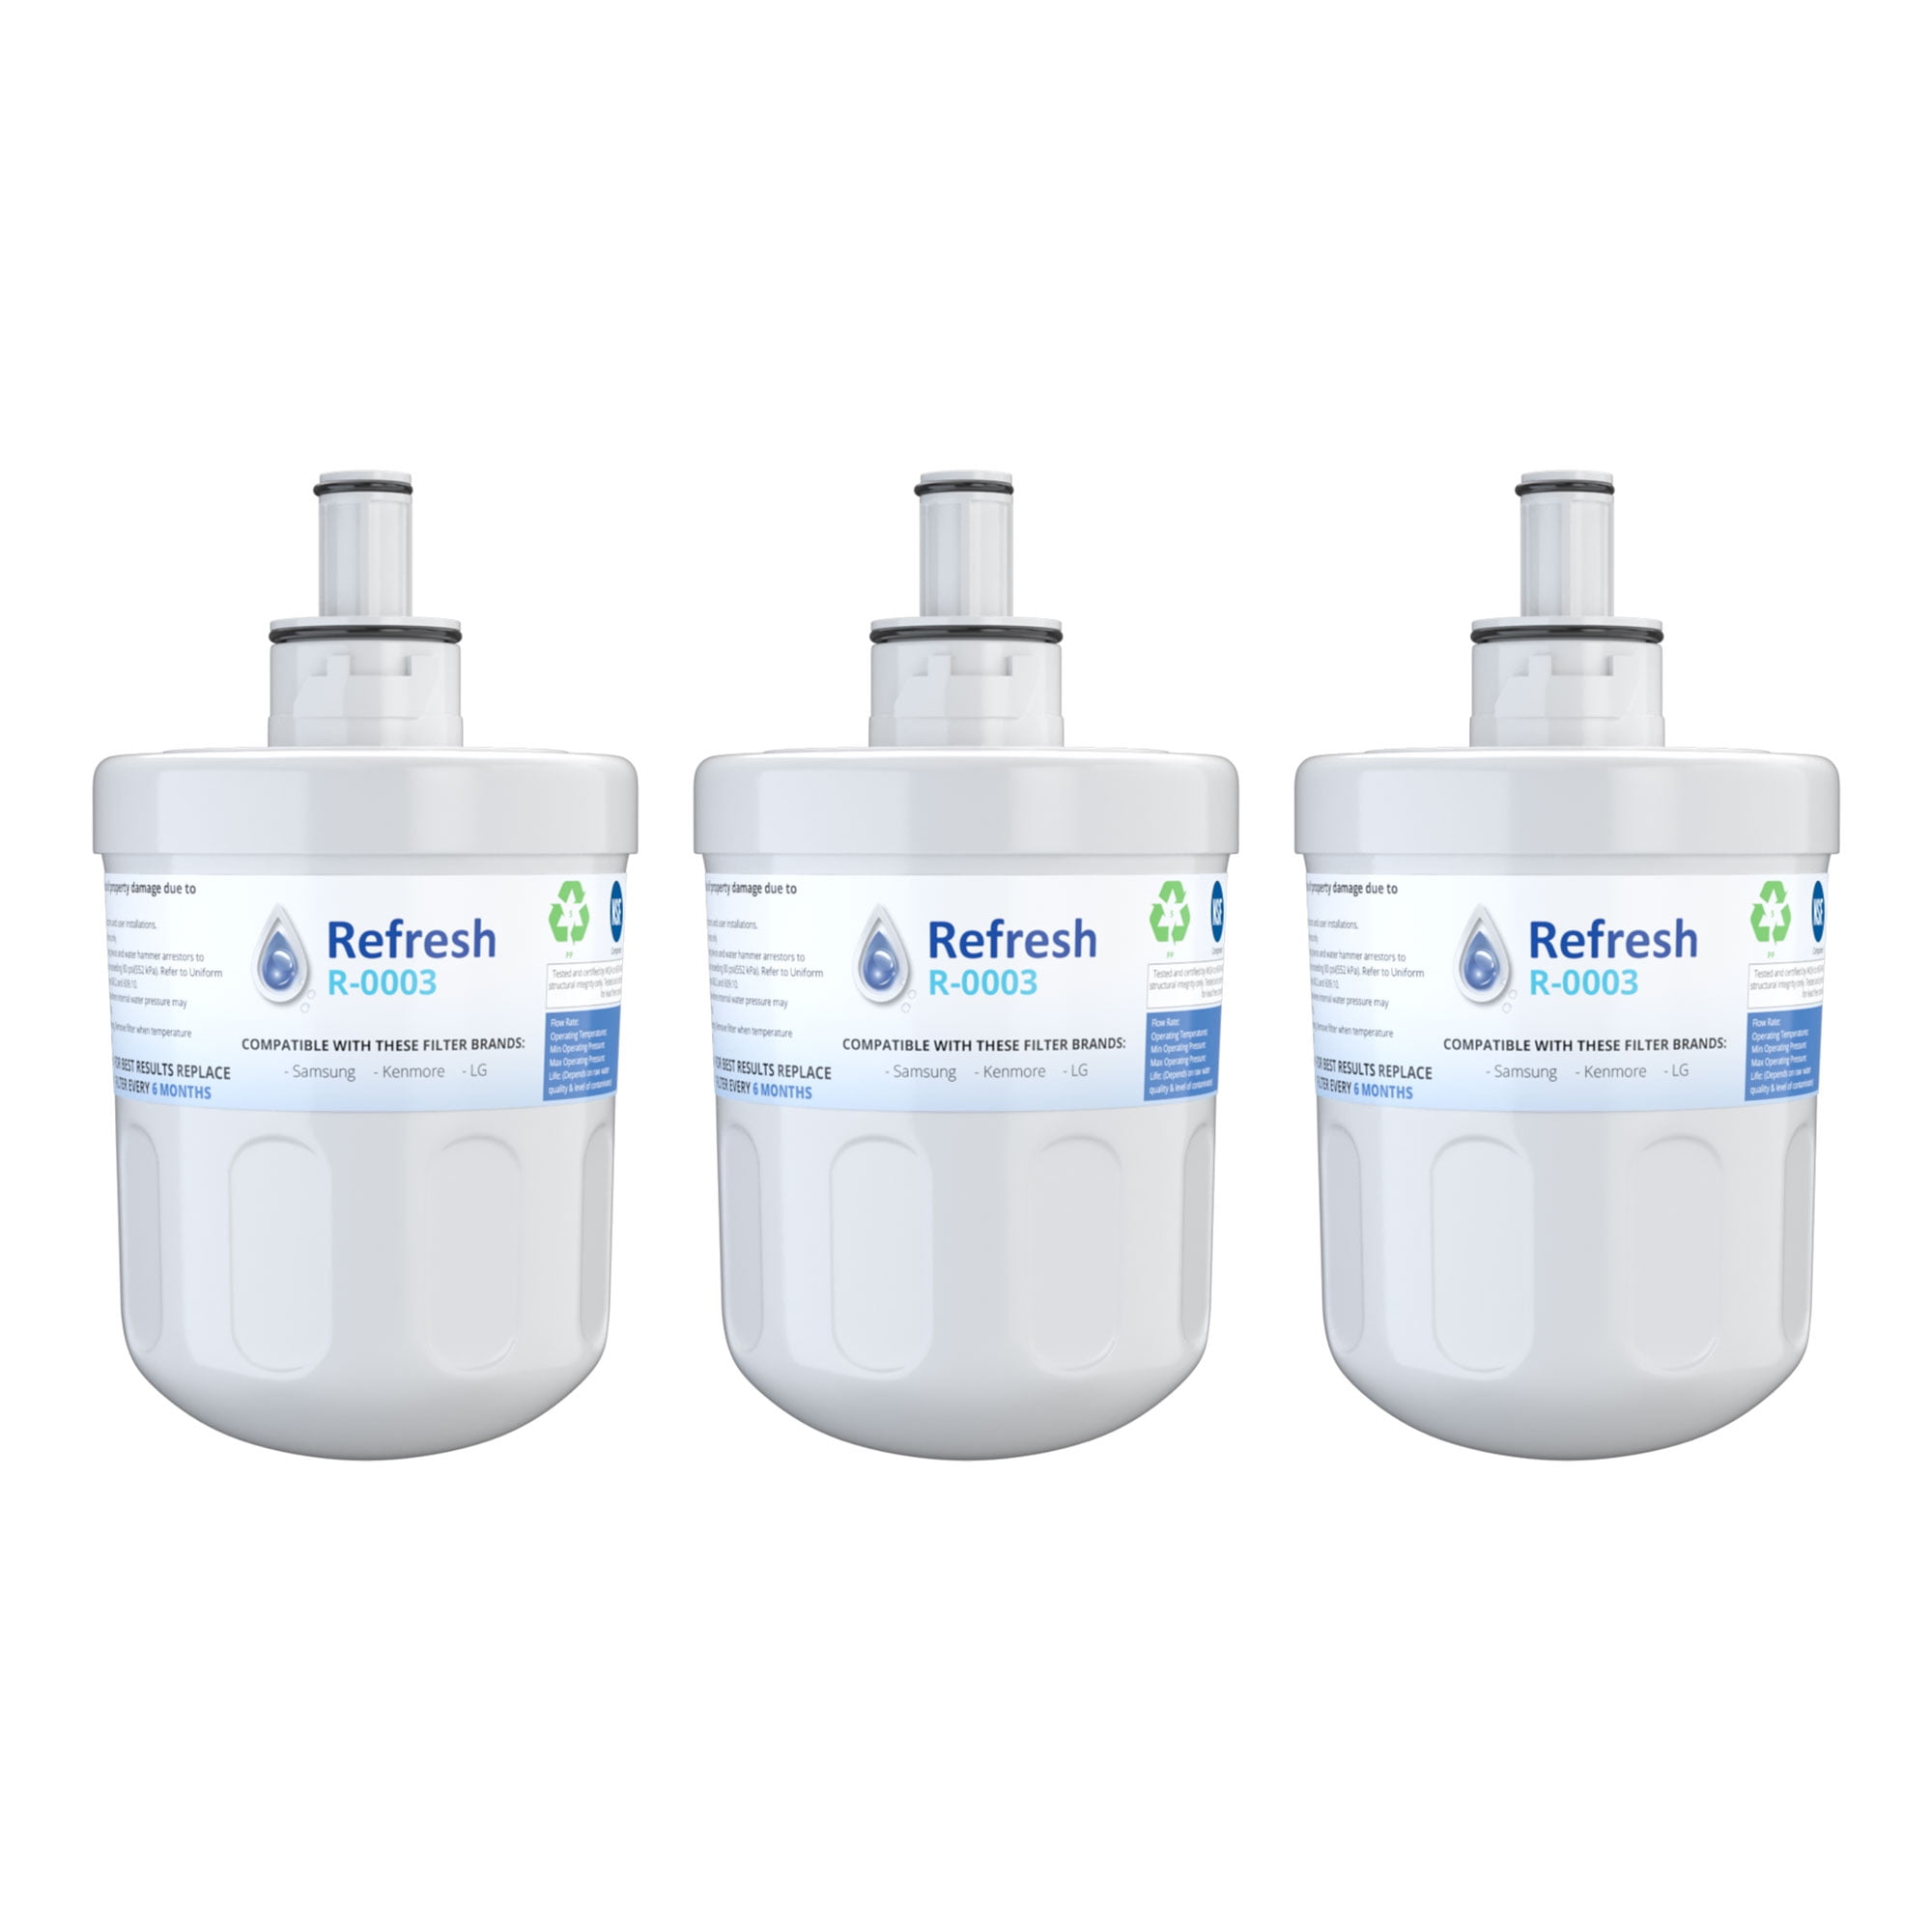 Refresh Replacement Water Filter Fits Samsung DA29-00002B Refrigerators 6 Pack 